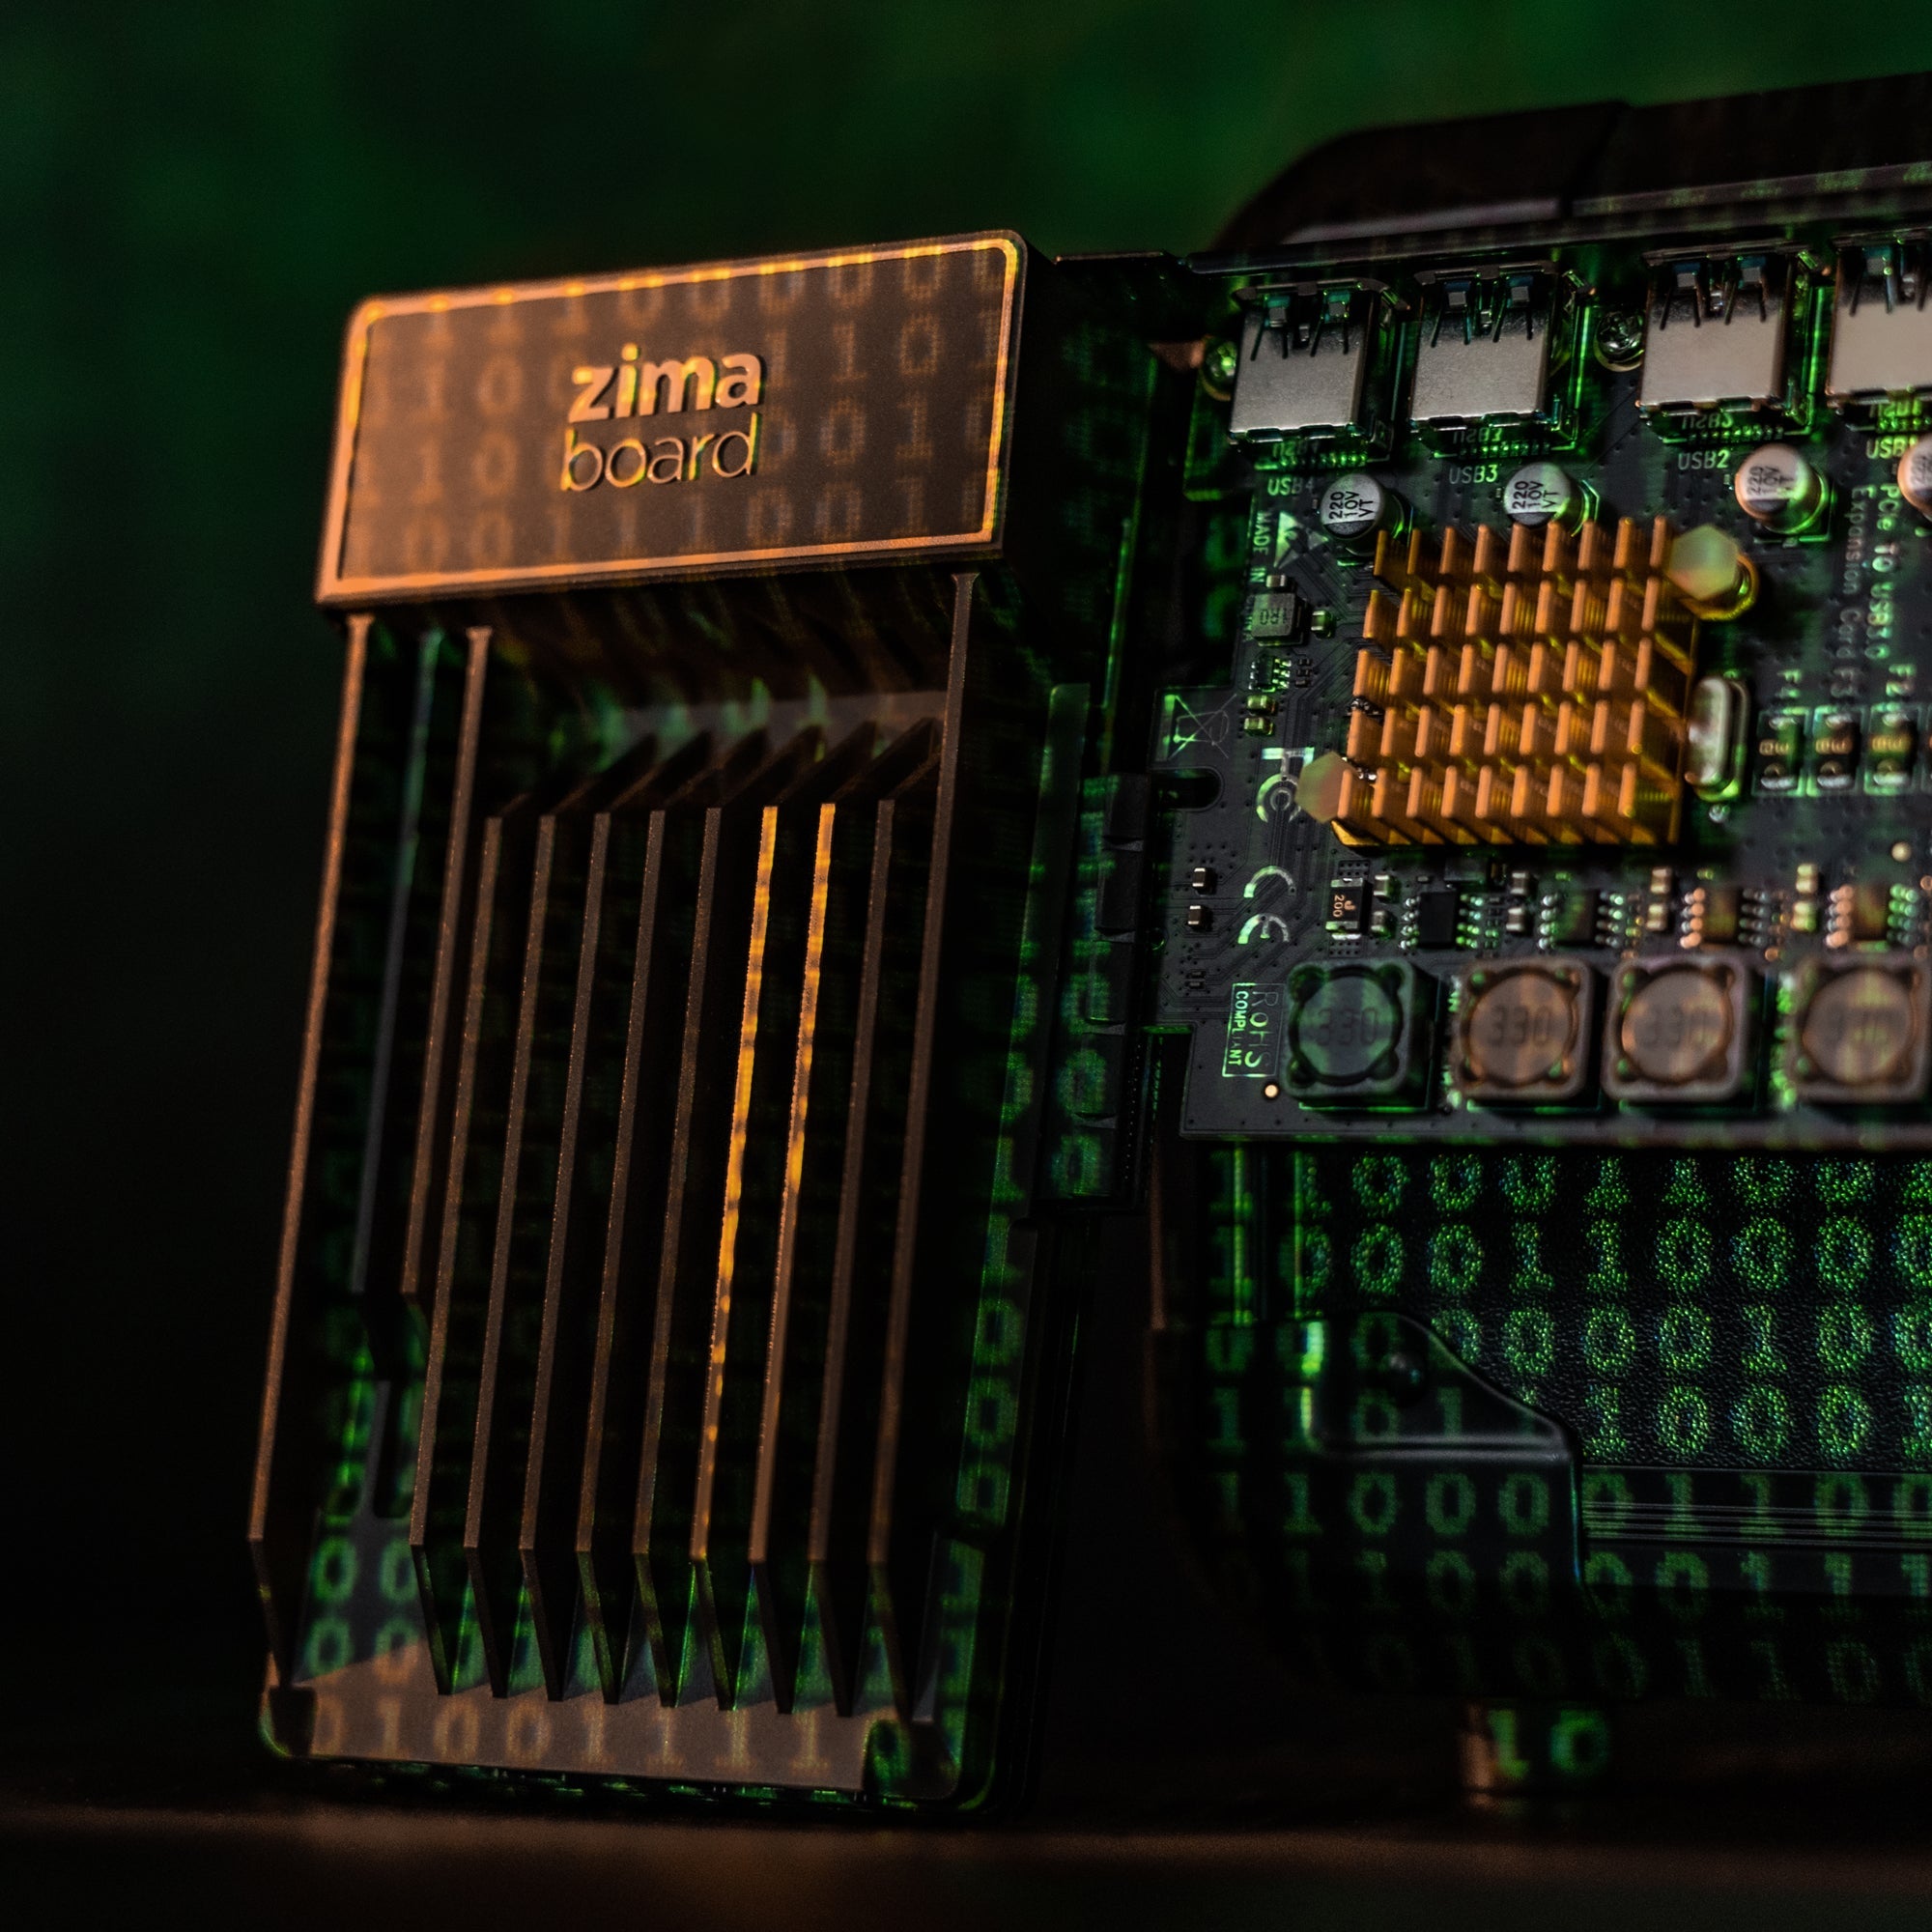  zimaboard Single Board Server Starter Kit 832 + MiniDP to HDMI  + SATA Y-Cable : Electronics